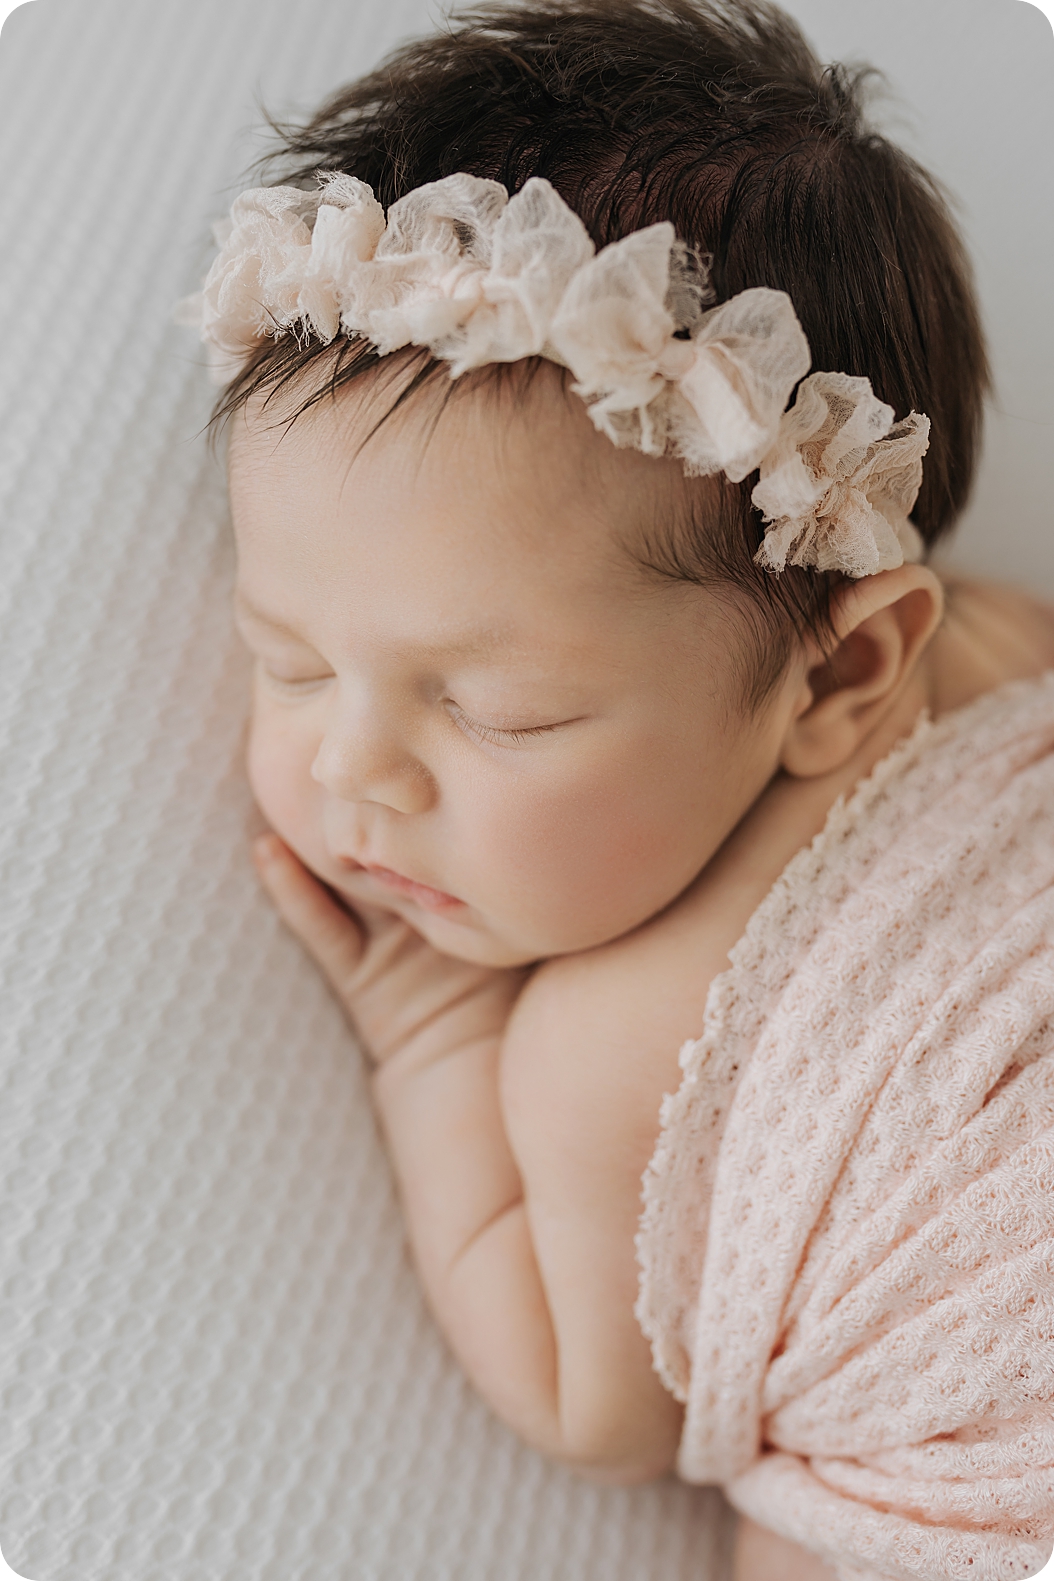 NICU baby sleeps during Utah newborn portraits with Beka Price Photography 